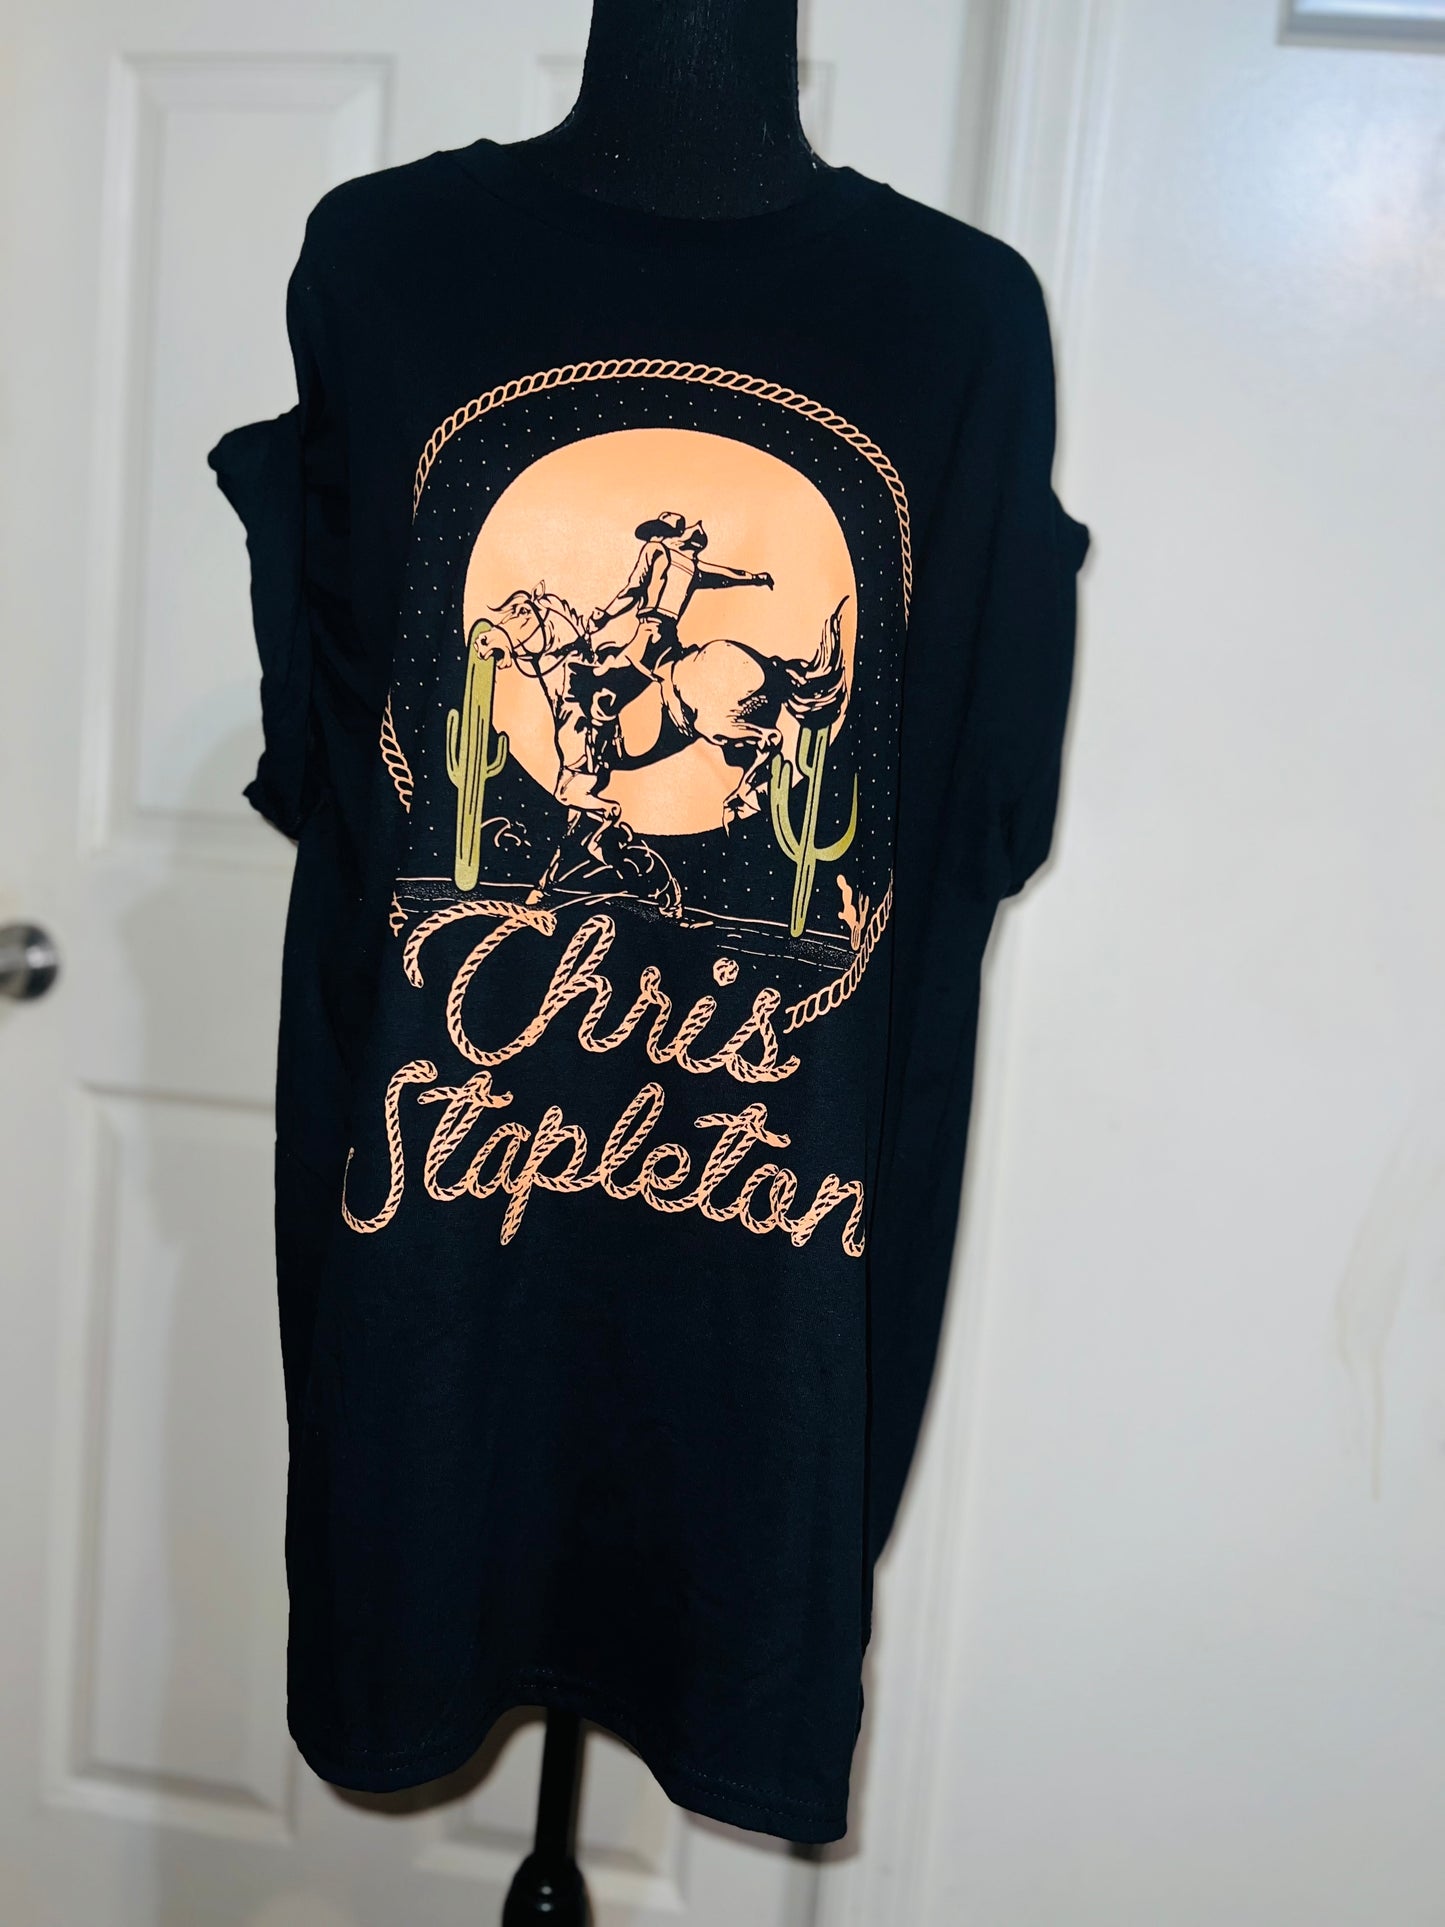 Chris Stapleton Oversized Distressed Tee